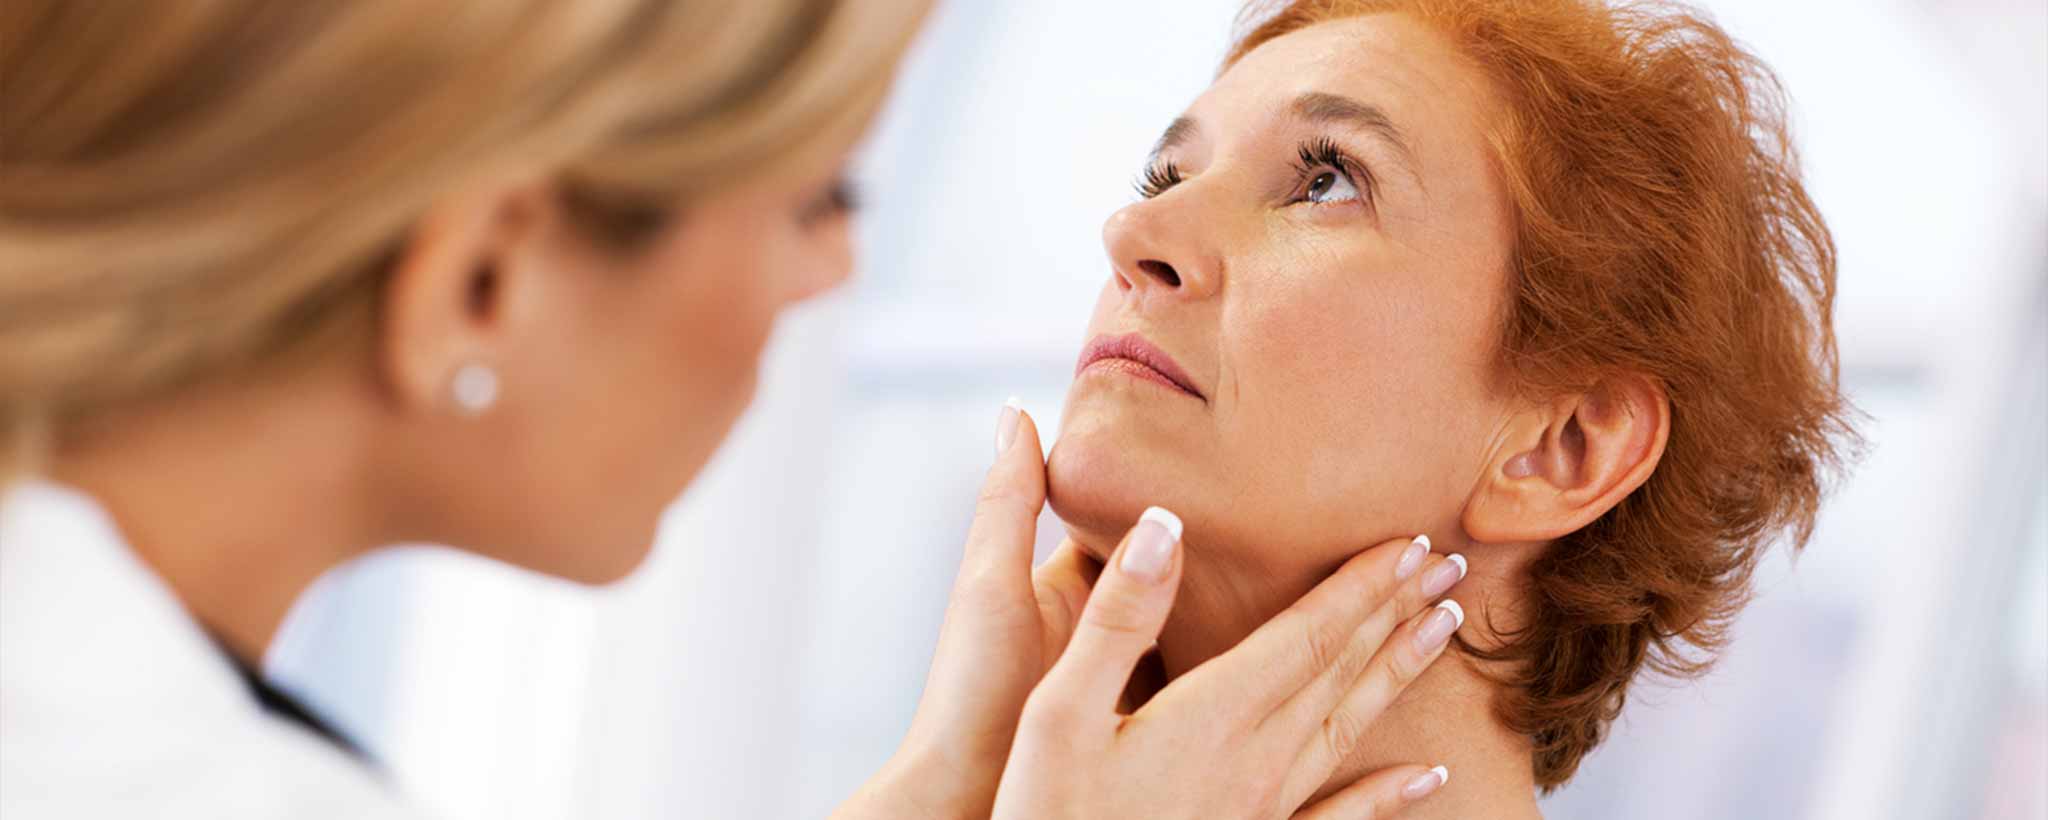 'Woman getting thyroid checkup'